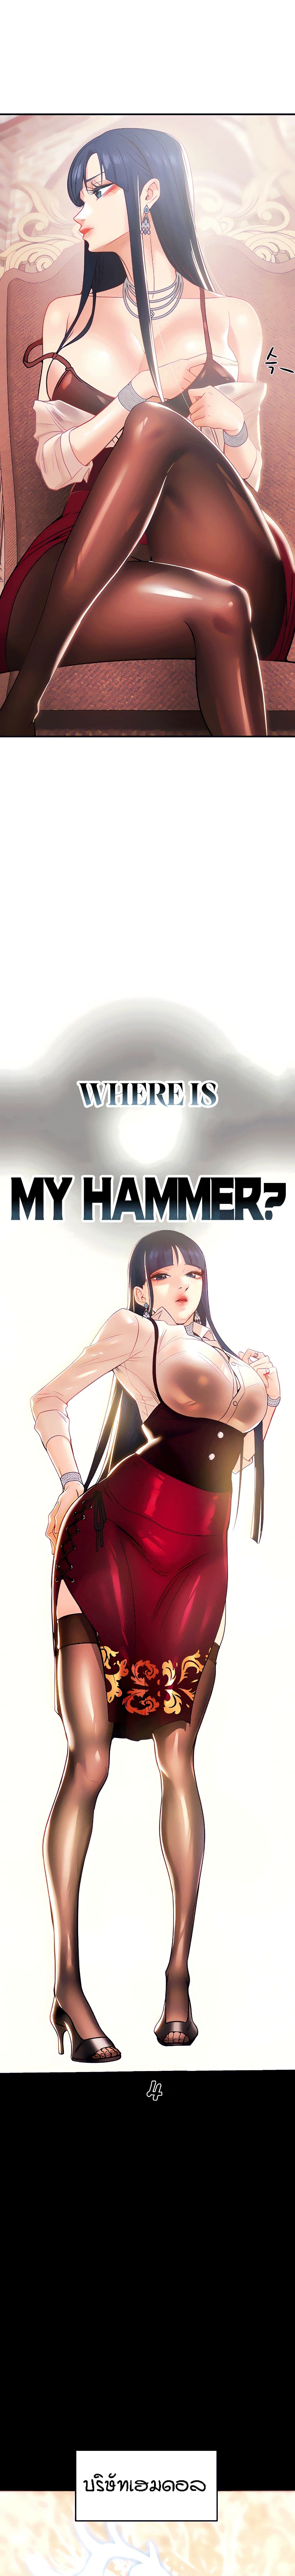 Where Did My Hammer Go? 4-4